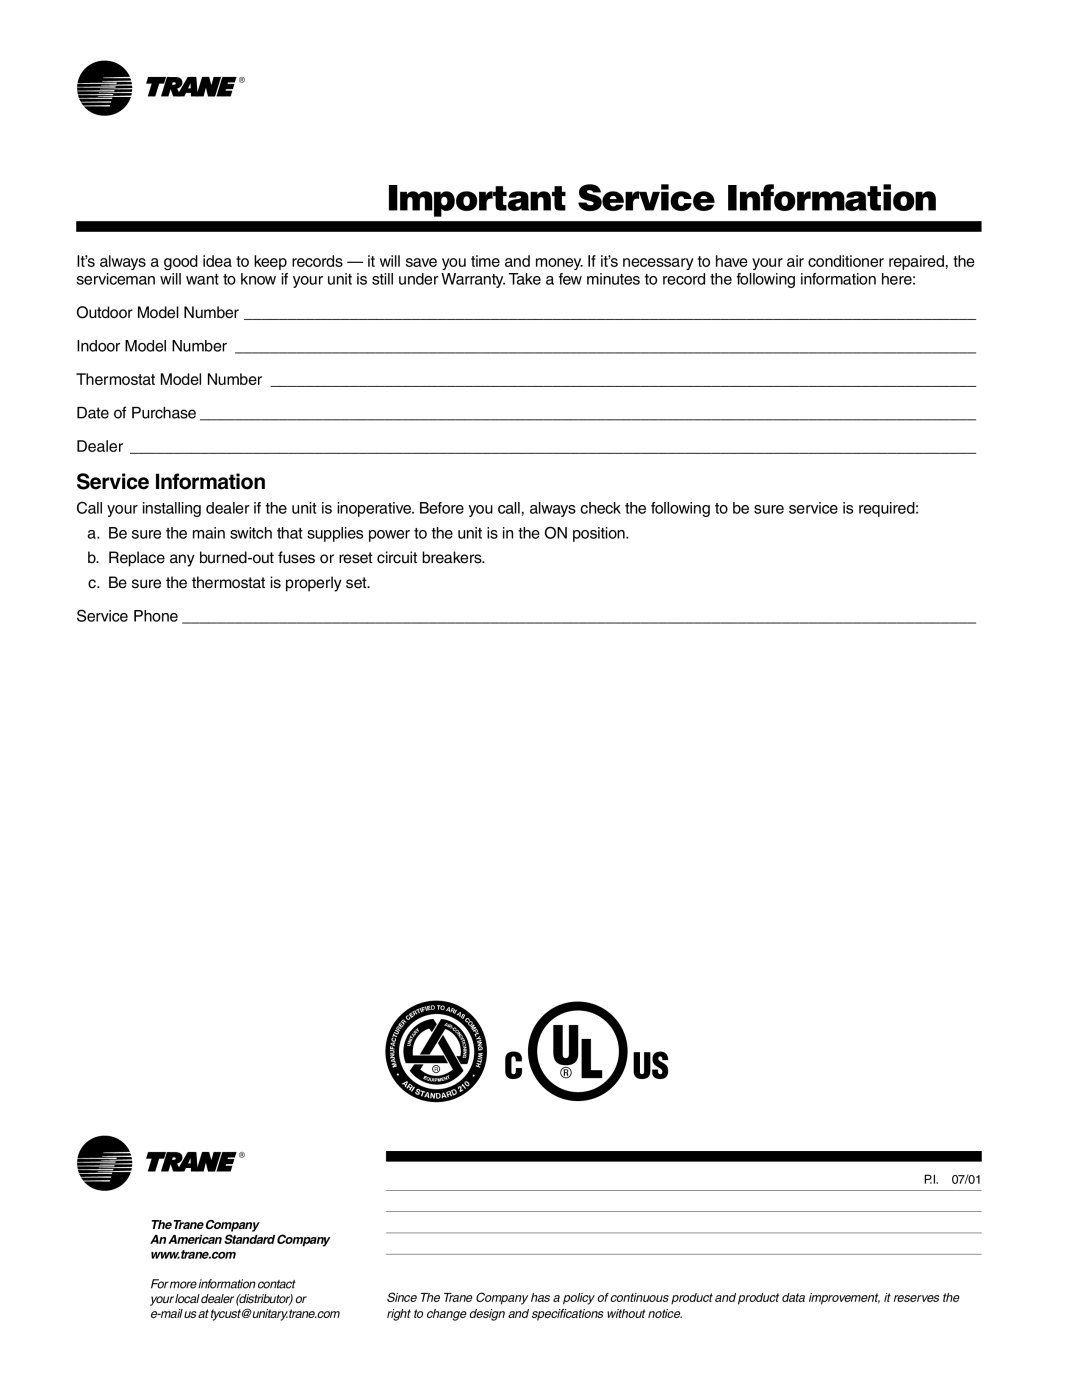 Trane XL manual Important Service Information 